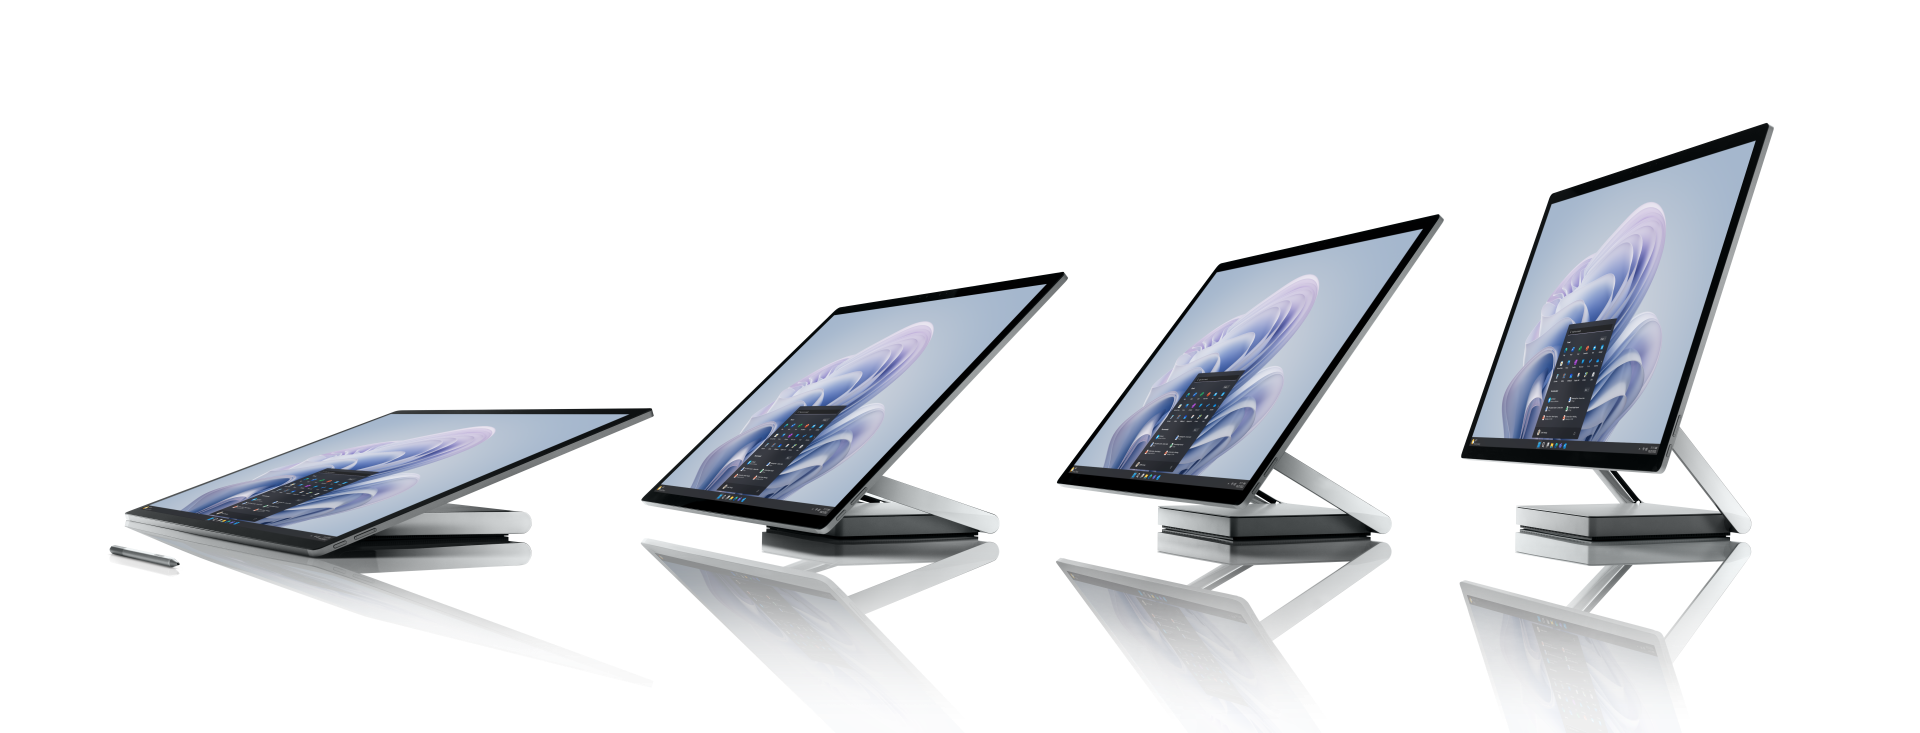 Surface Studio 2+ transforming from flat studio mode into upright desktop mode